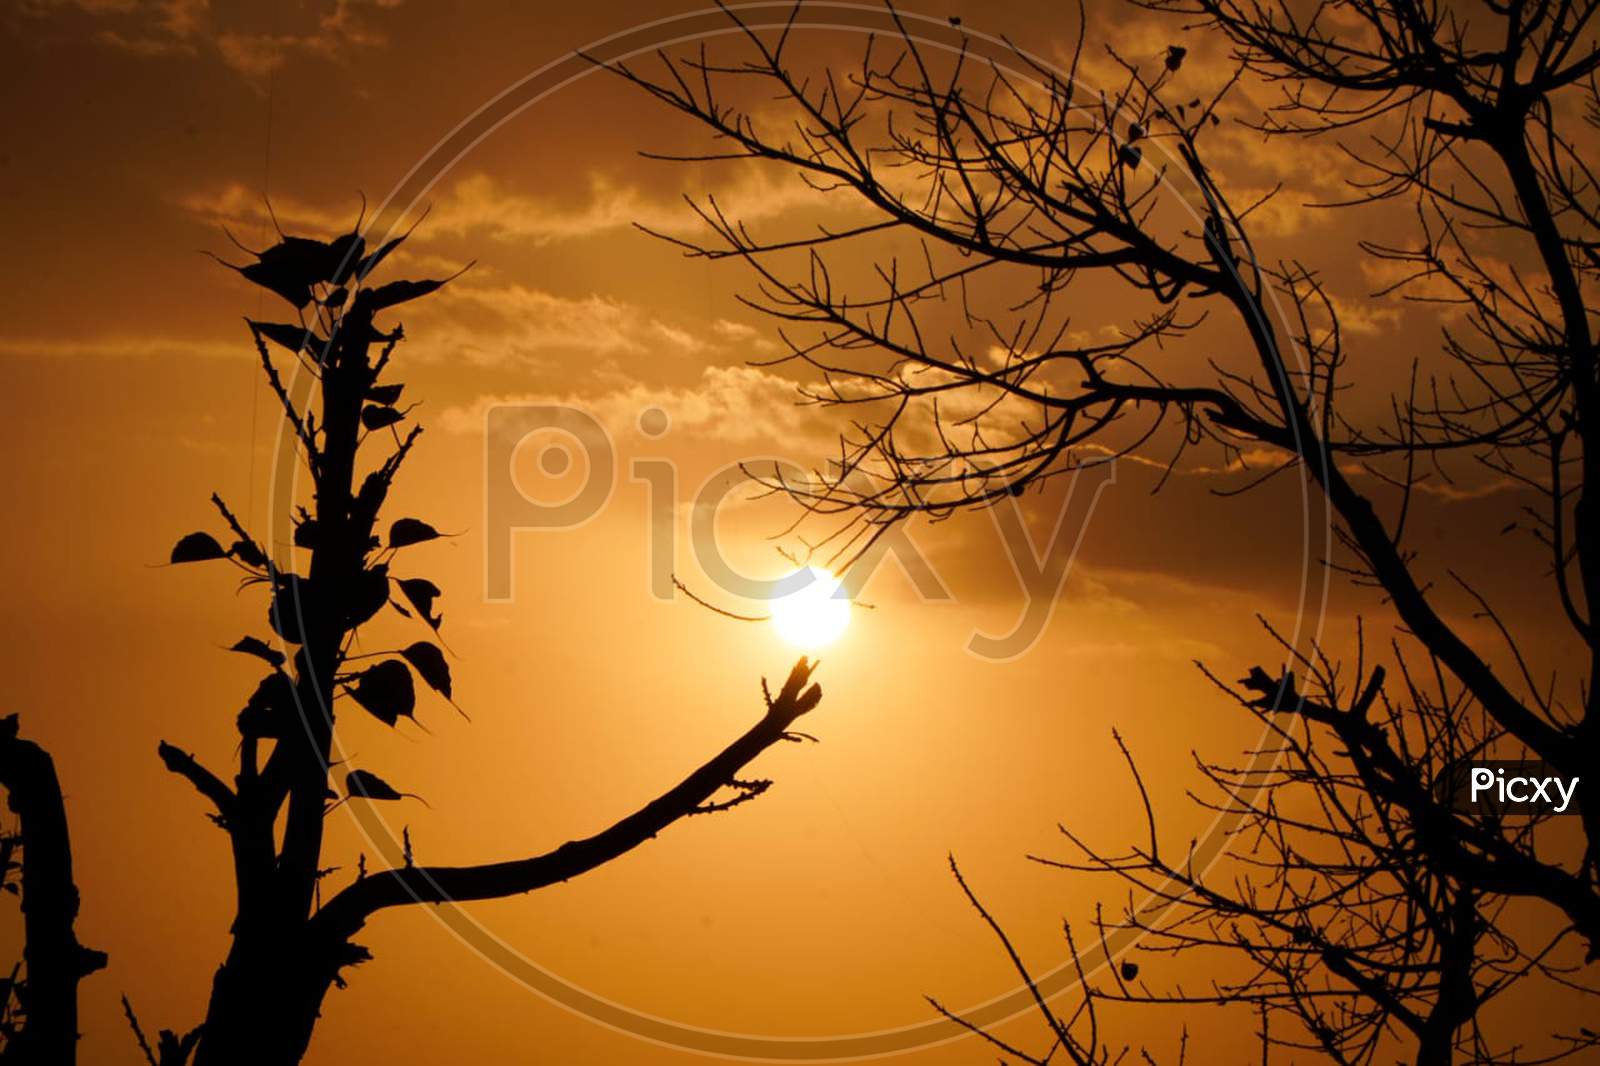 Sunset silhouette image